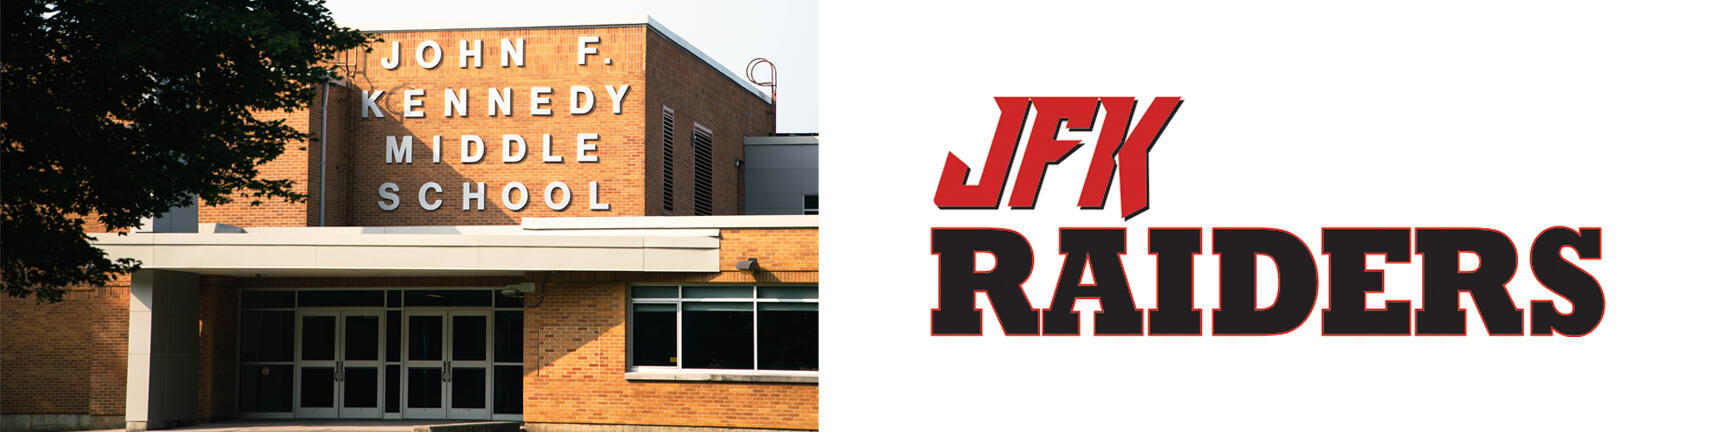 Gambar bangunan Sekolah JFK dan Logo JFK Raiders